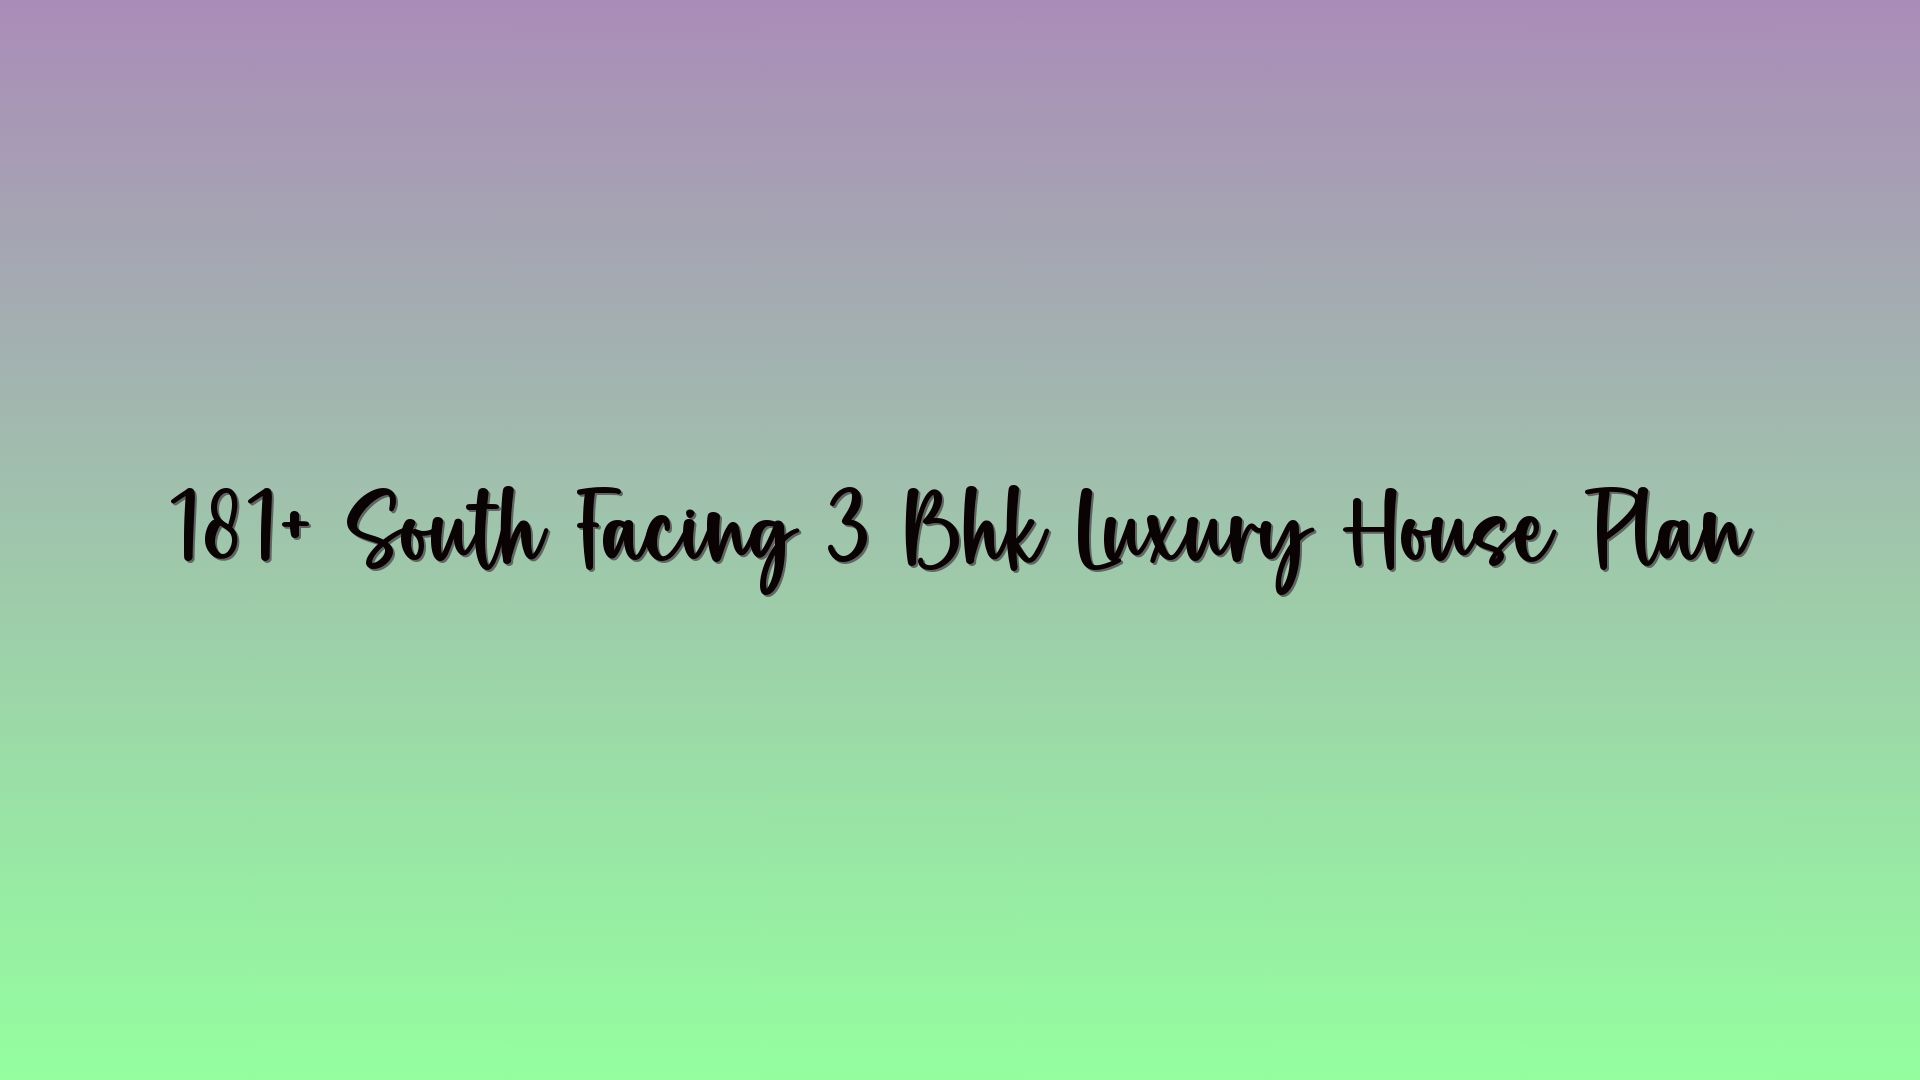 181+ South Facing 3 Bhk Luxury House Plan